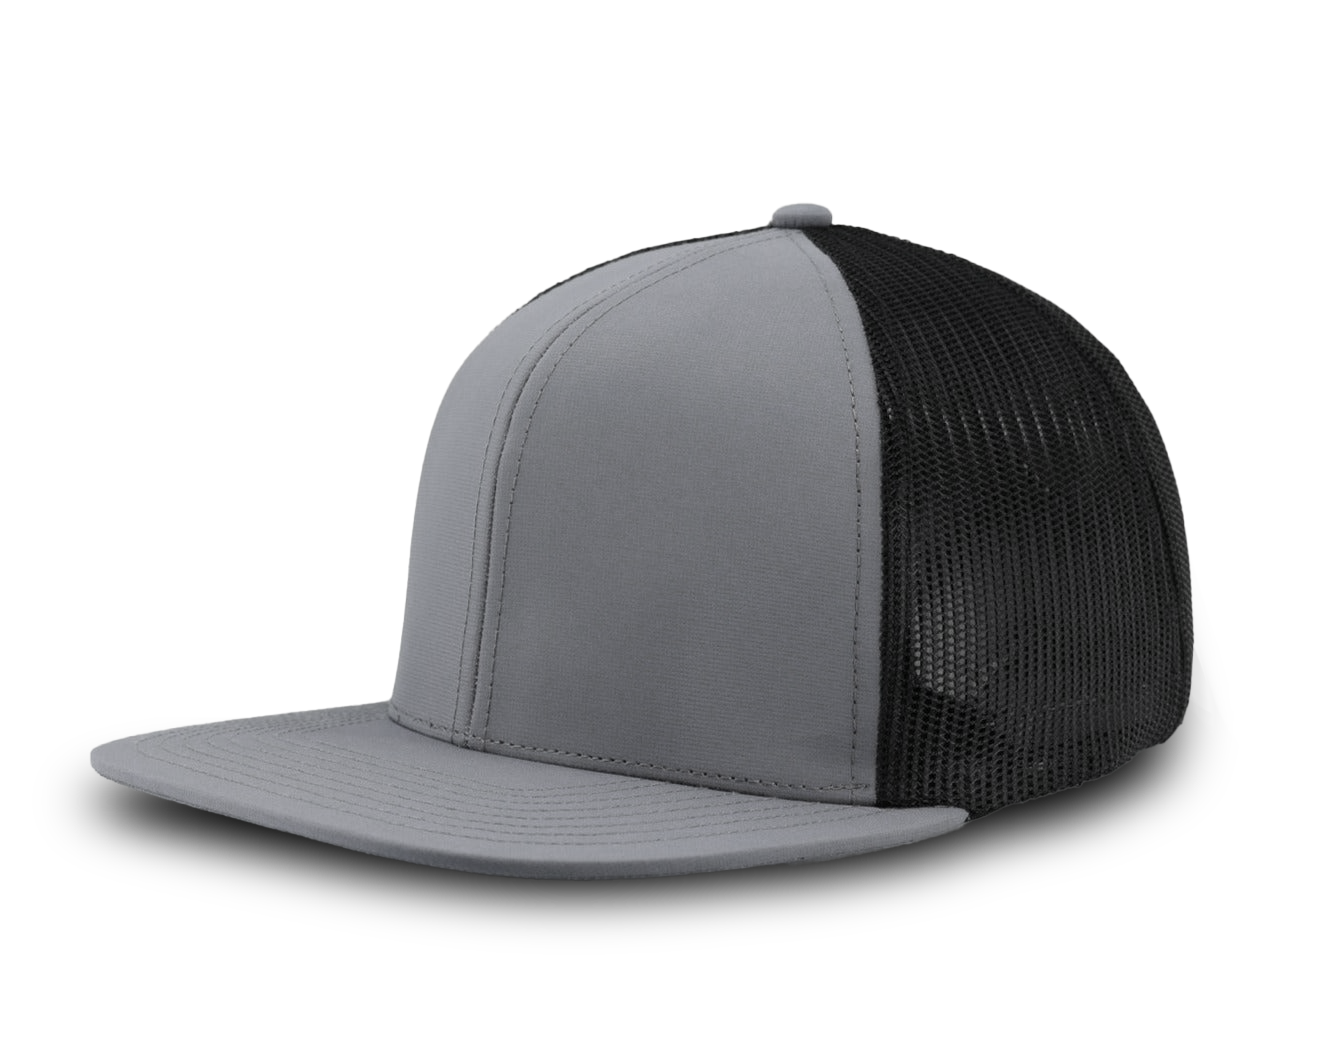 GENERAL-Custom hat-Flatbill-Snapback-charcoal-black- Zapped Headwear